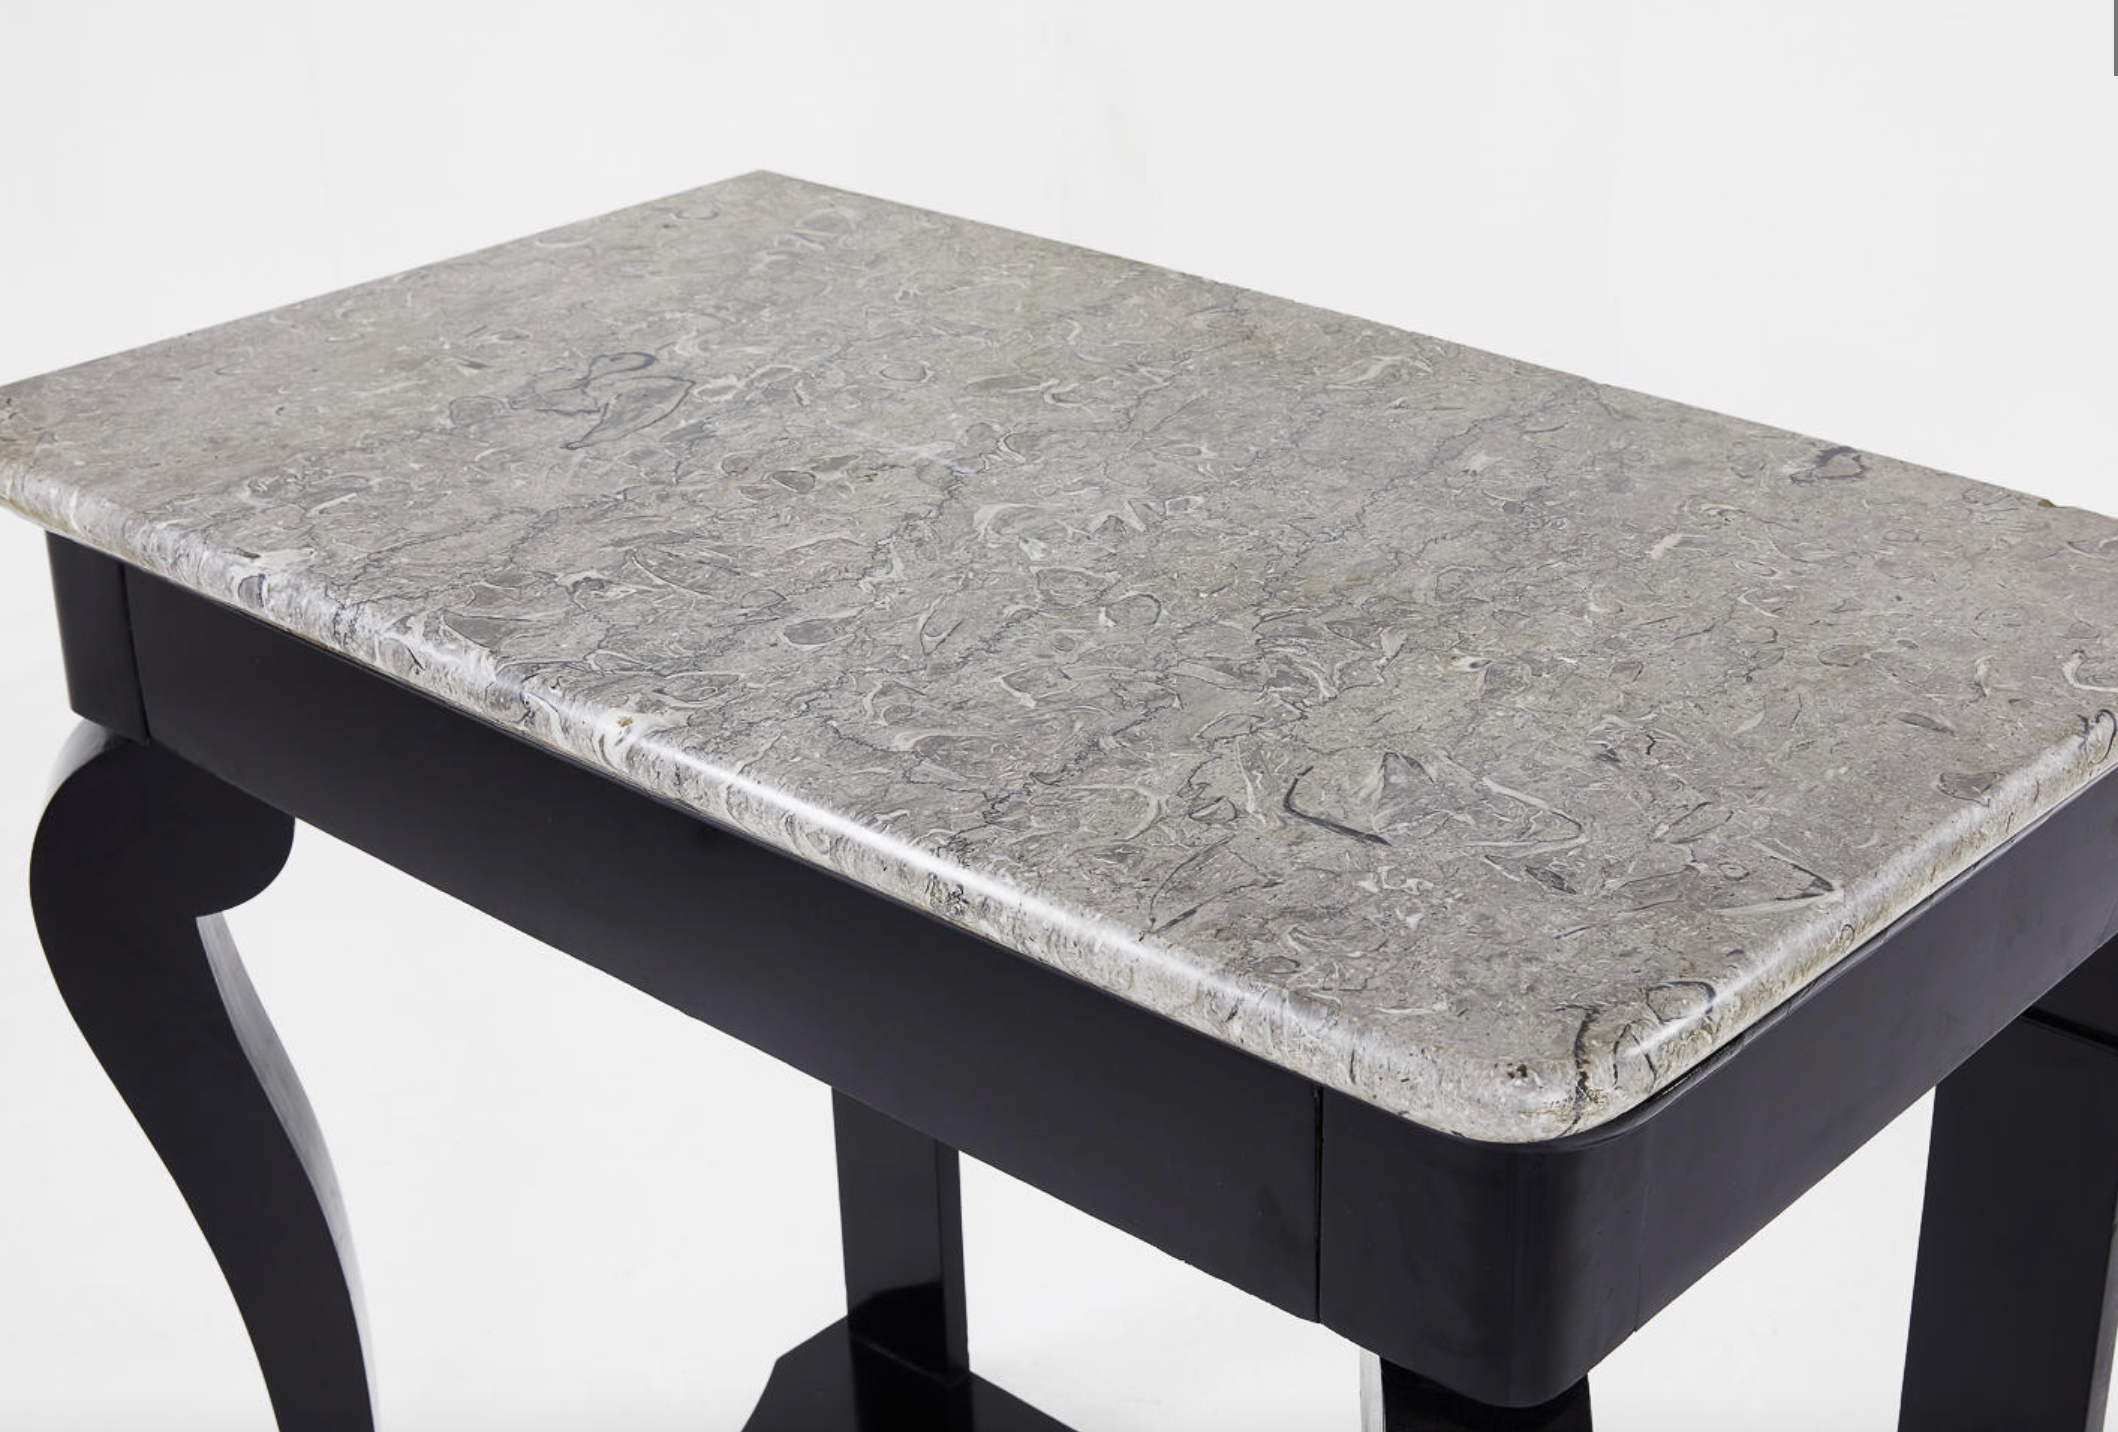 An Ebonized Biedermeier Console Table with Fossilized Stone Top